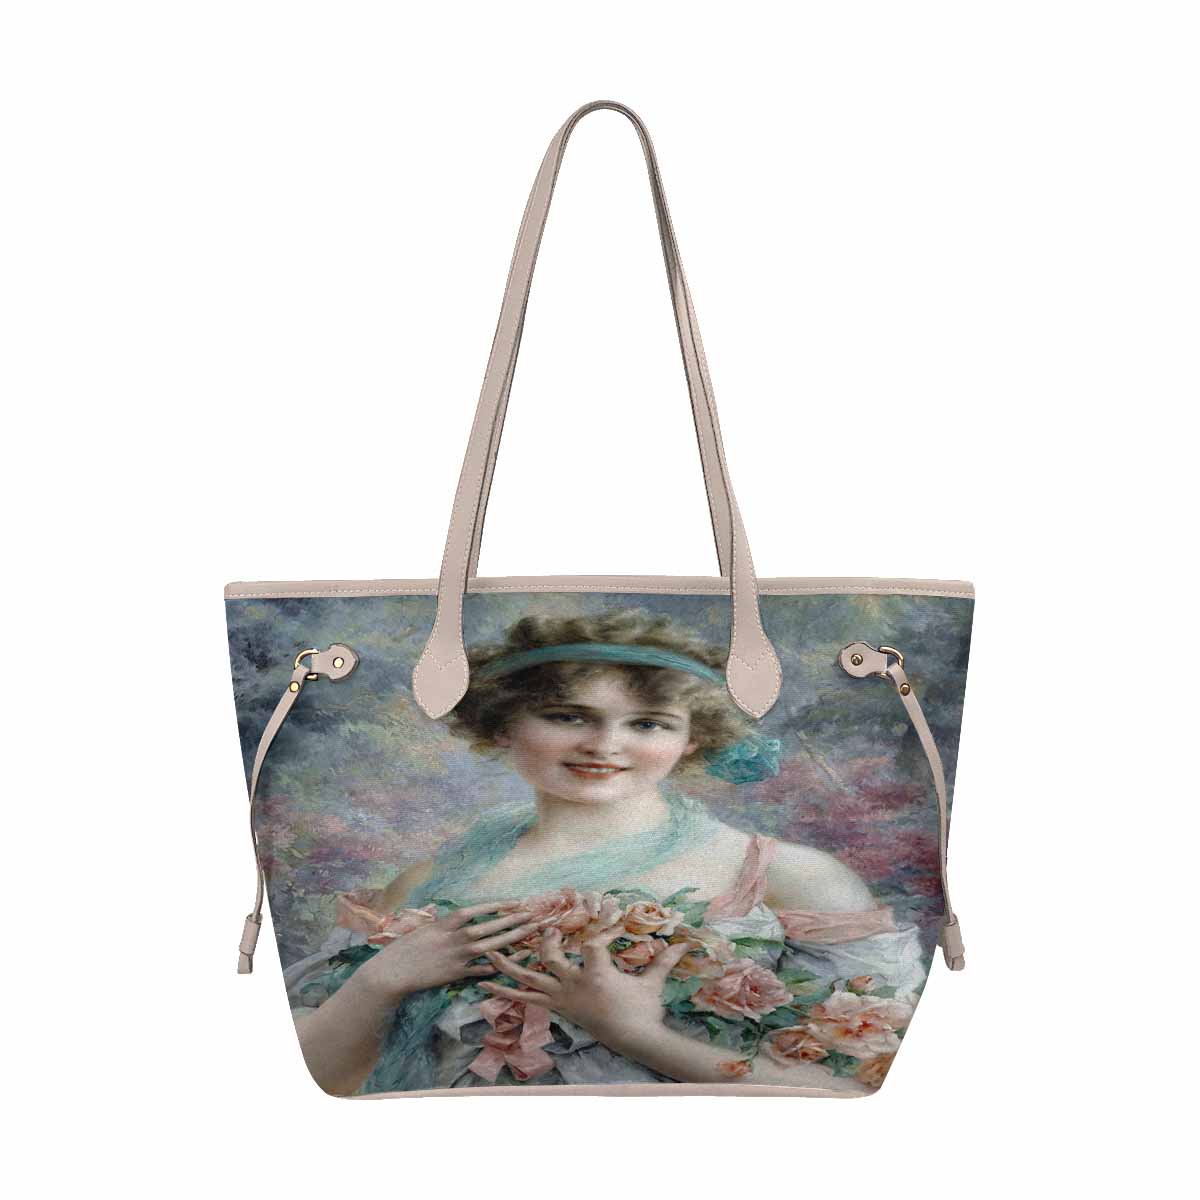 Victorian Lady Design Handbag, Model 1695361, The Rose Girl, BEIGE/TAN TRIM